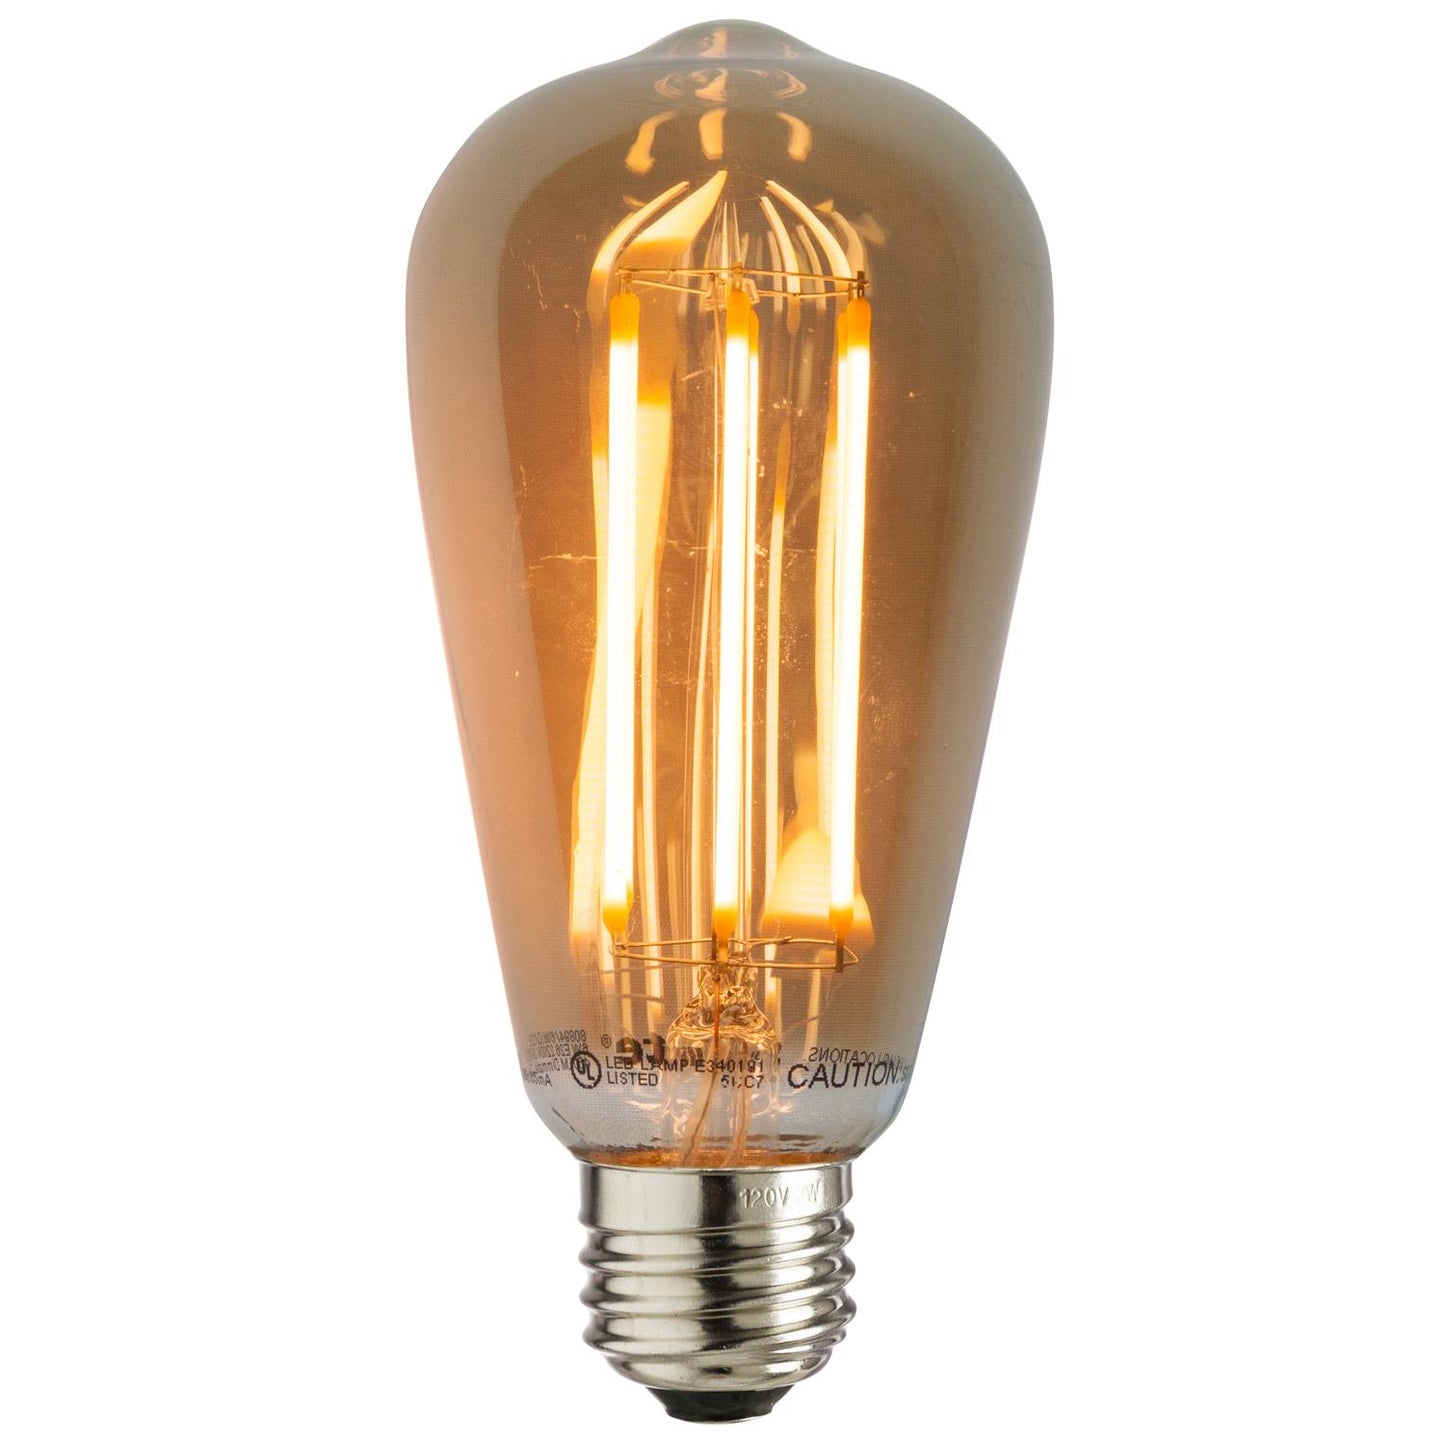 Sunlite 80894 LED Filament S19 Standard 6-Watt (40 Watt Equivalent) Transparent Dimmable Light Bulb, 2200K - Warm White